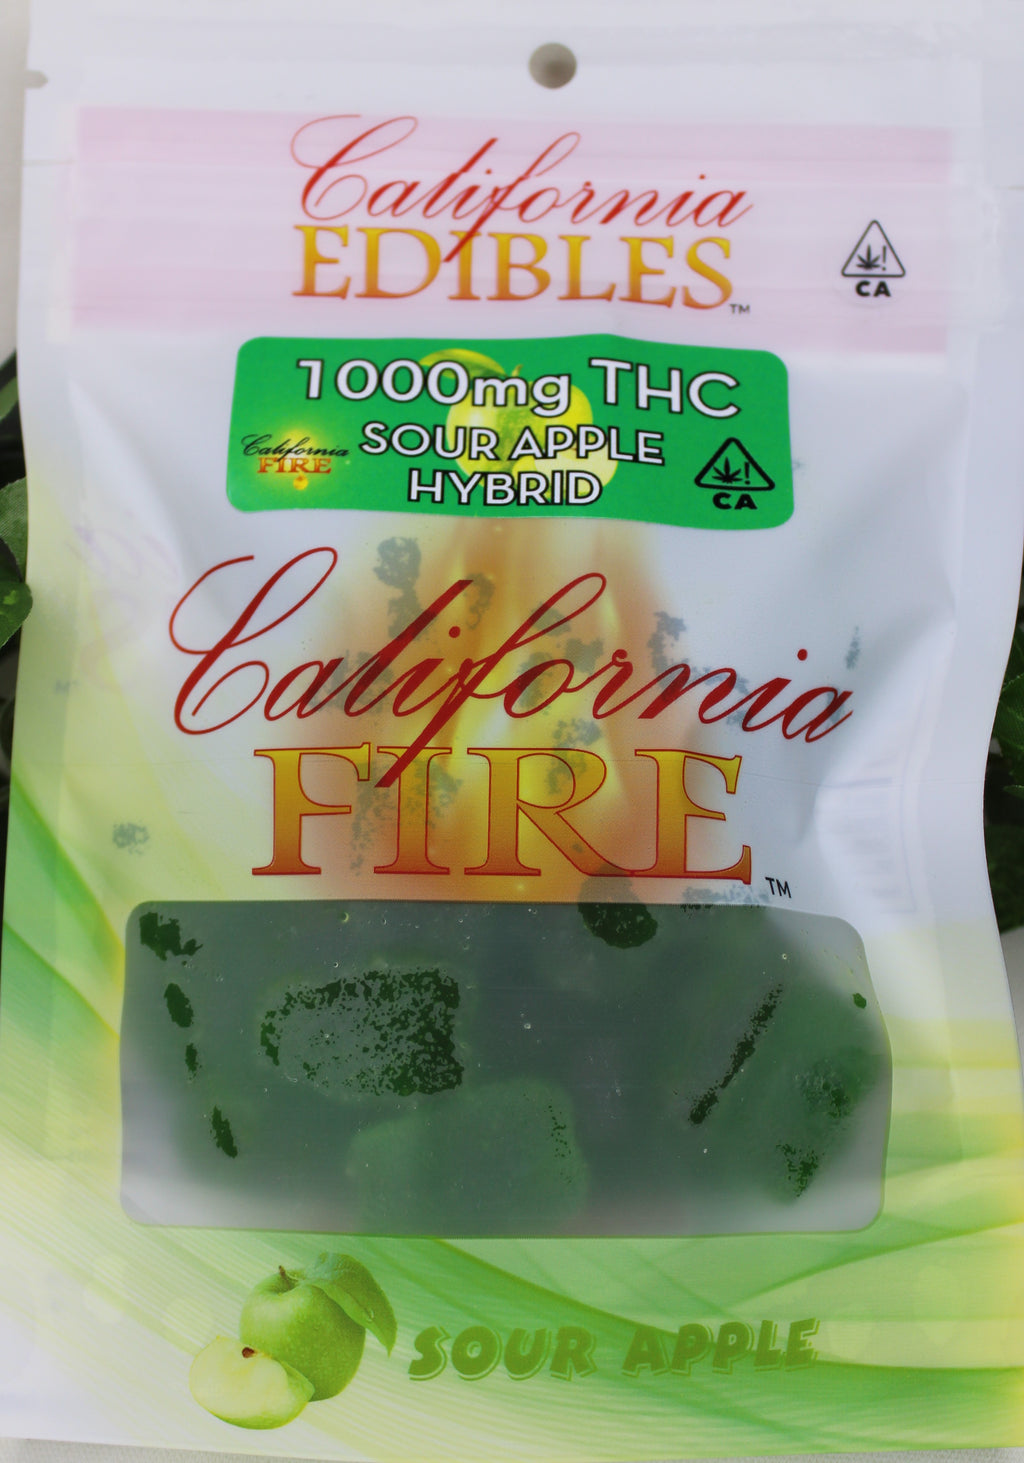 California Fire 1000mg "Sour Apple Hybrid" THC Edible